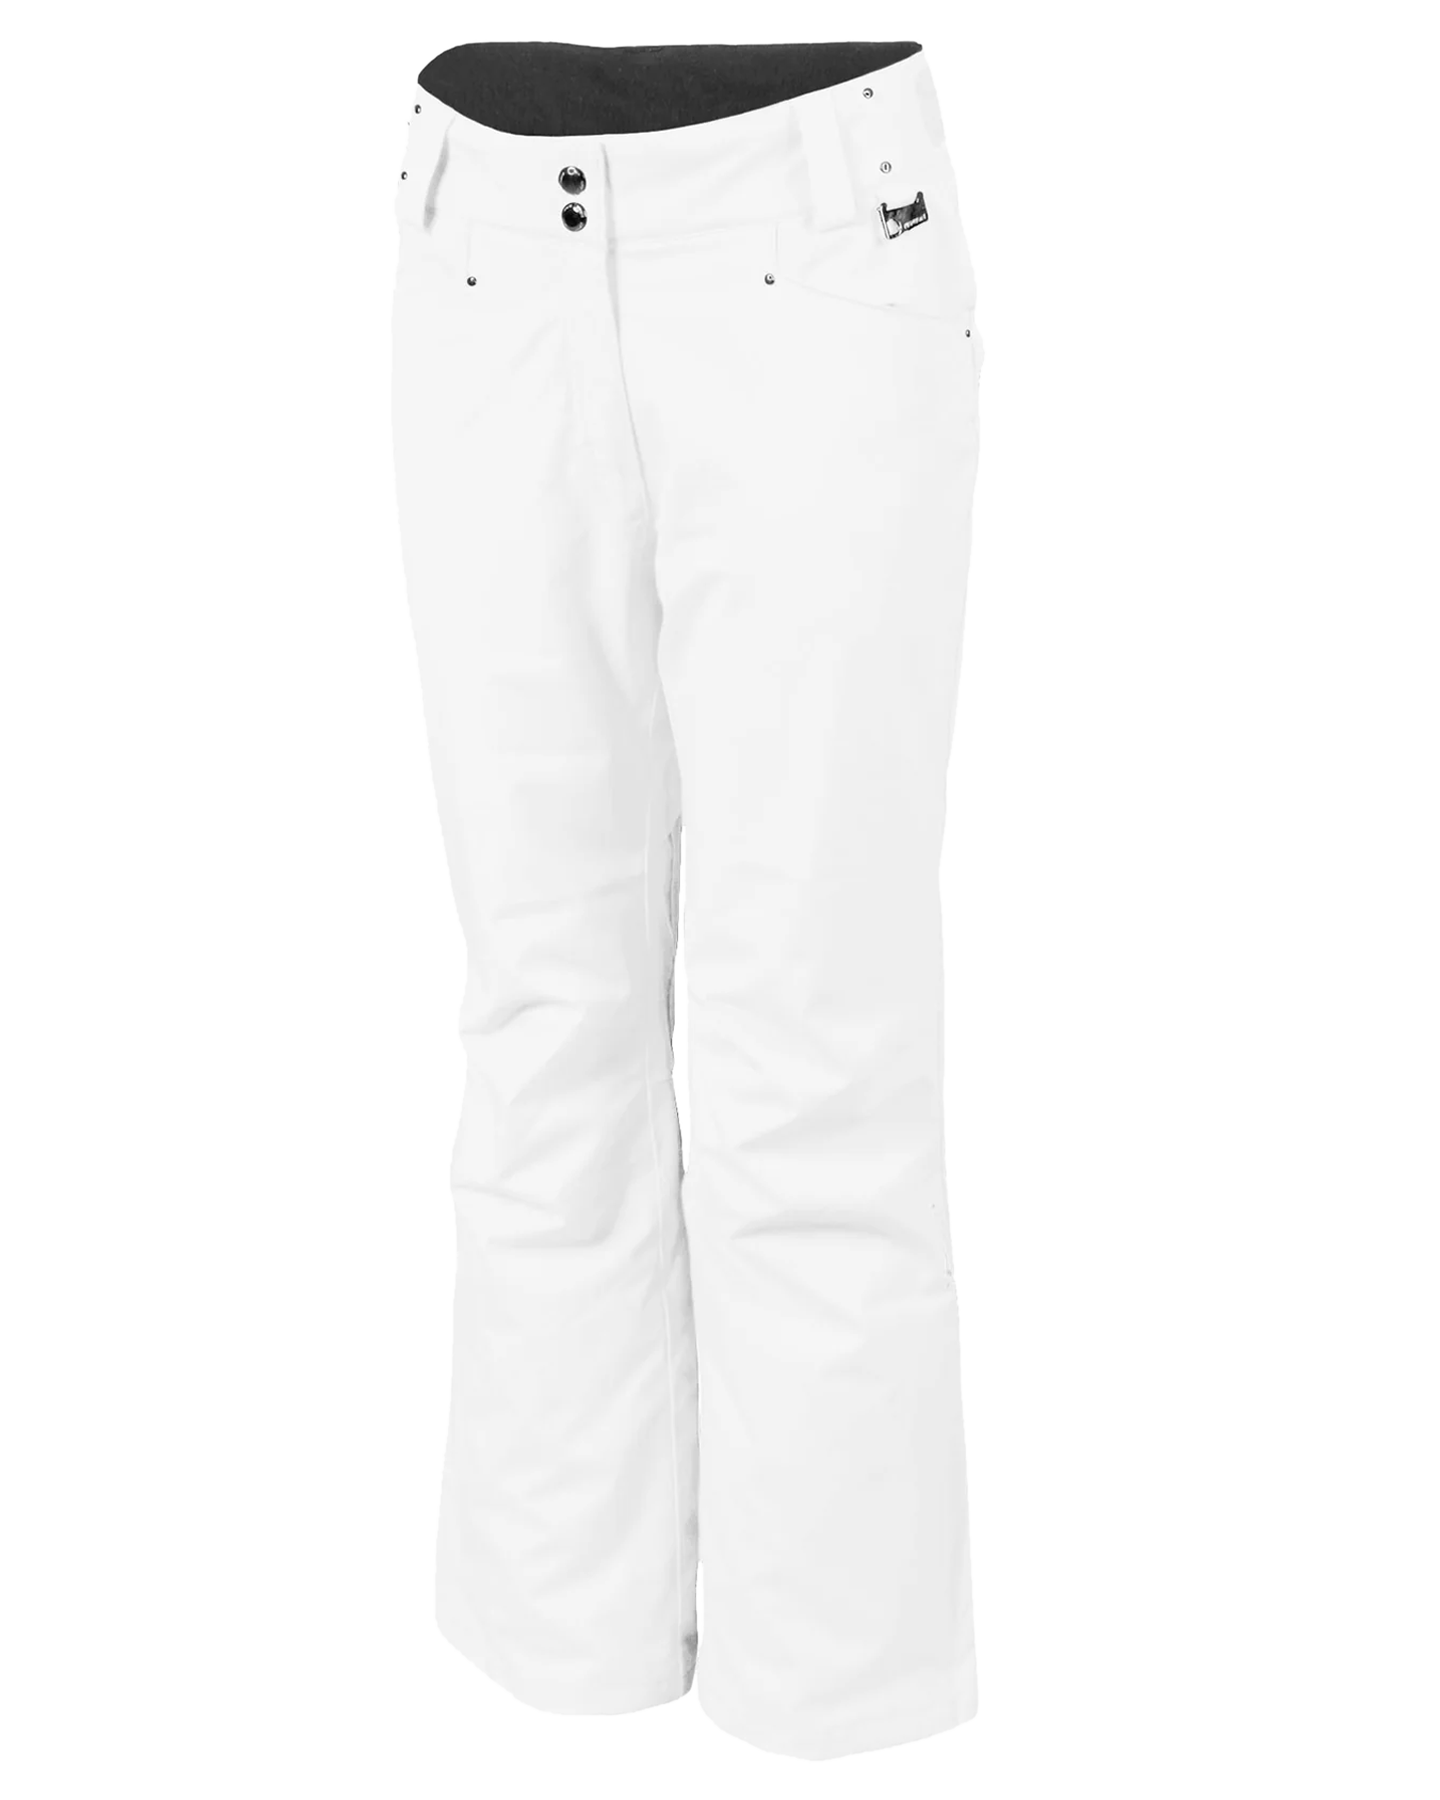 Karbon Pearl II Diamond Tech Women's Snow Pants - Arctic White Women's Snow Pants - SnowSkiersWarehouse